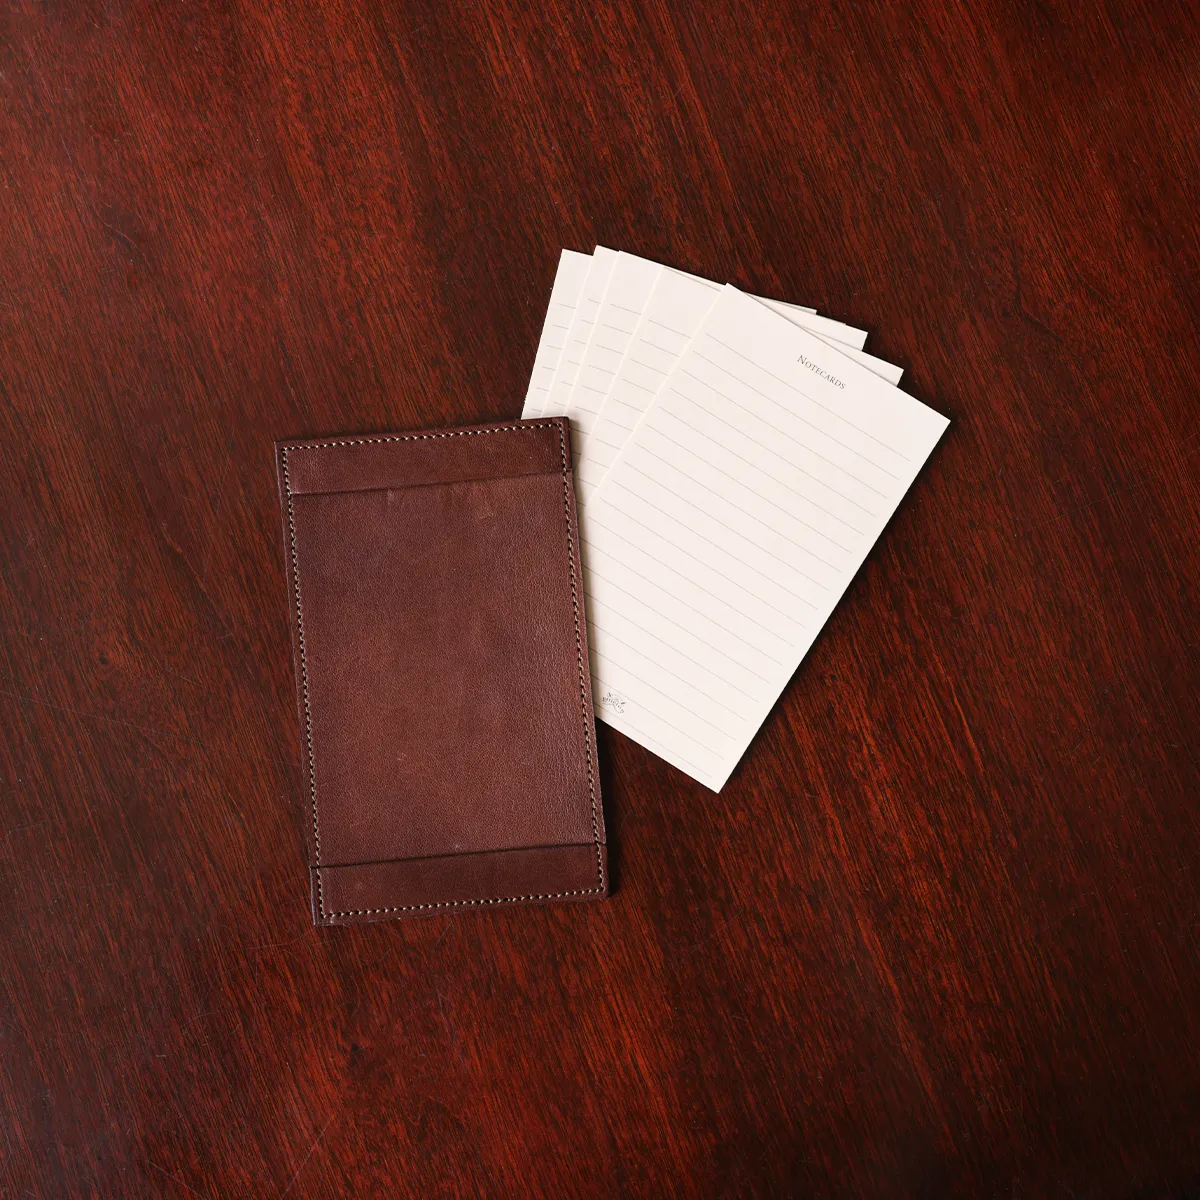 Grain Leather Card Holder in light-blue-silver-hw